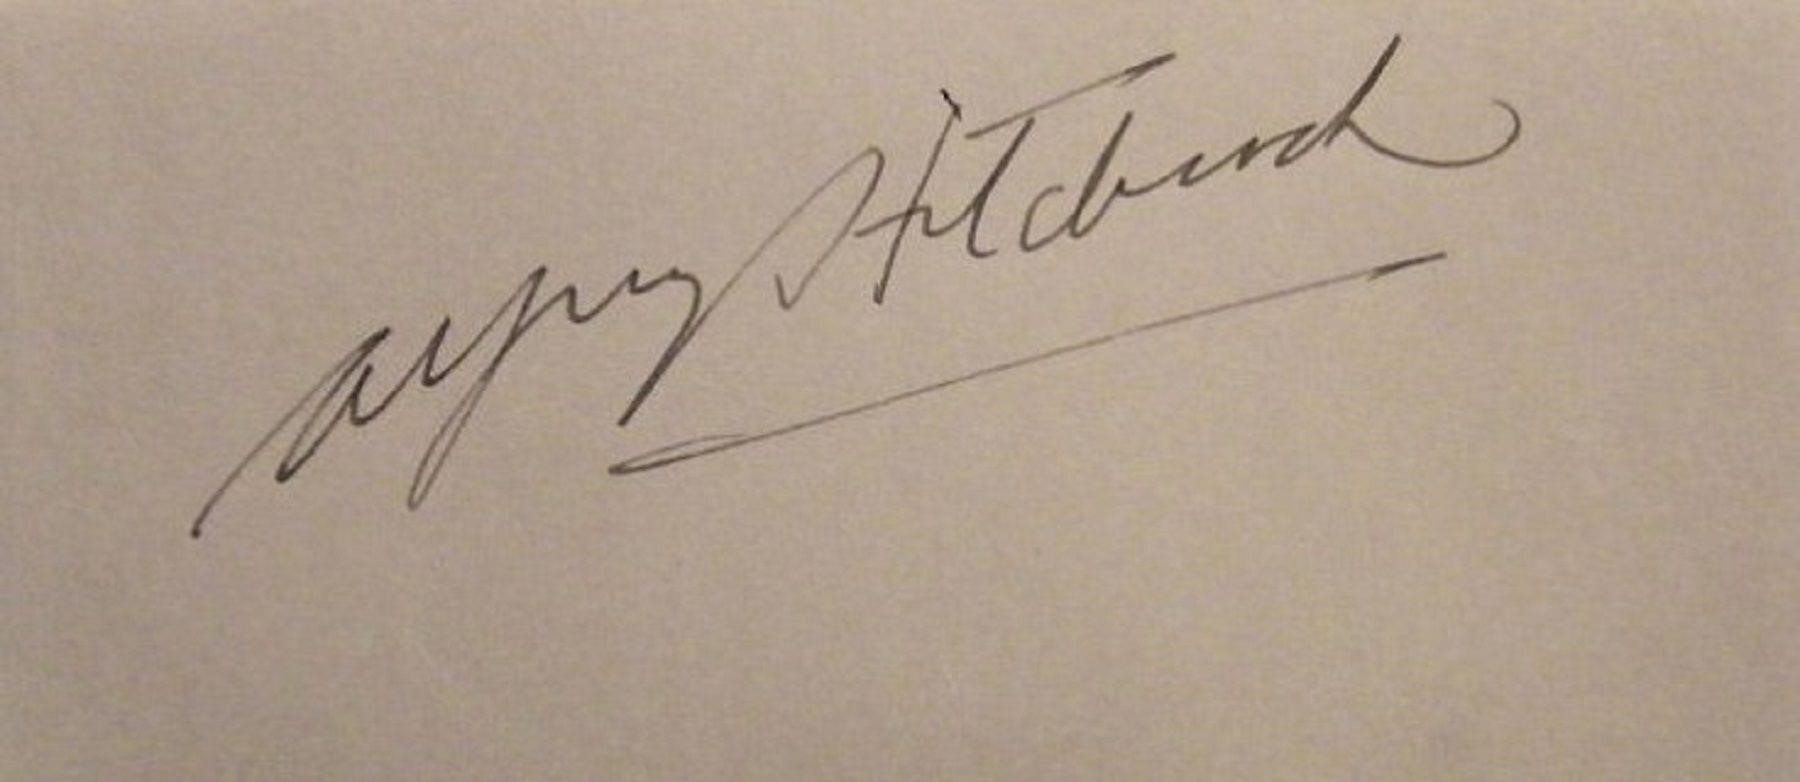 Alfred Hitchcock signature slip